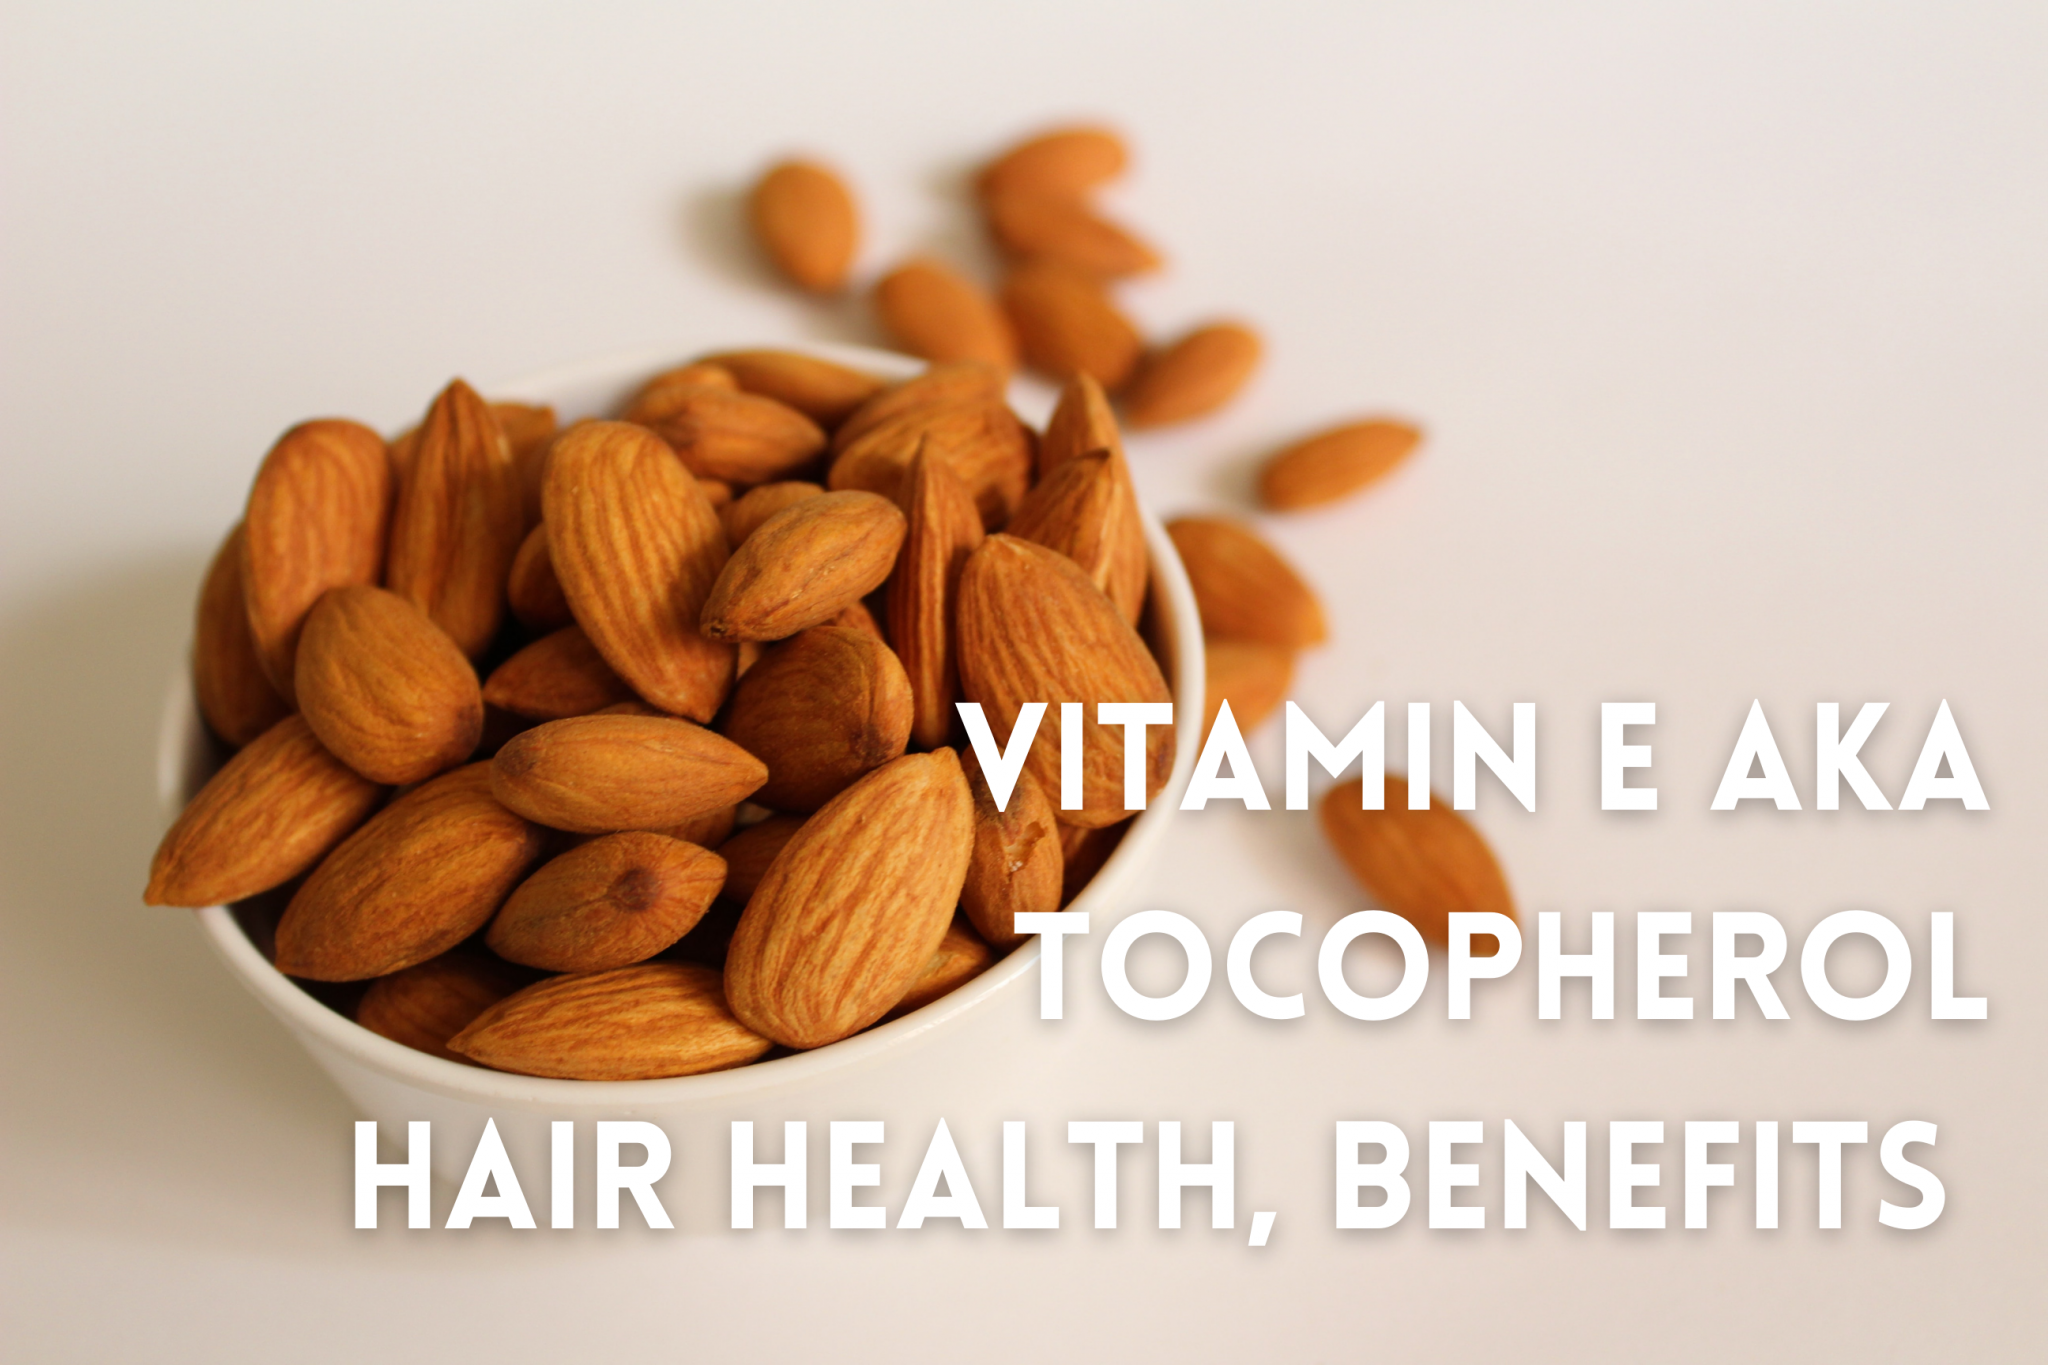 Vitamin E AKA Tocopherol Hair Health Benefits & More: almonds are high in Vitamin E.